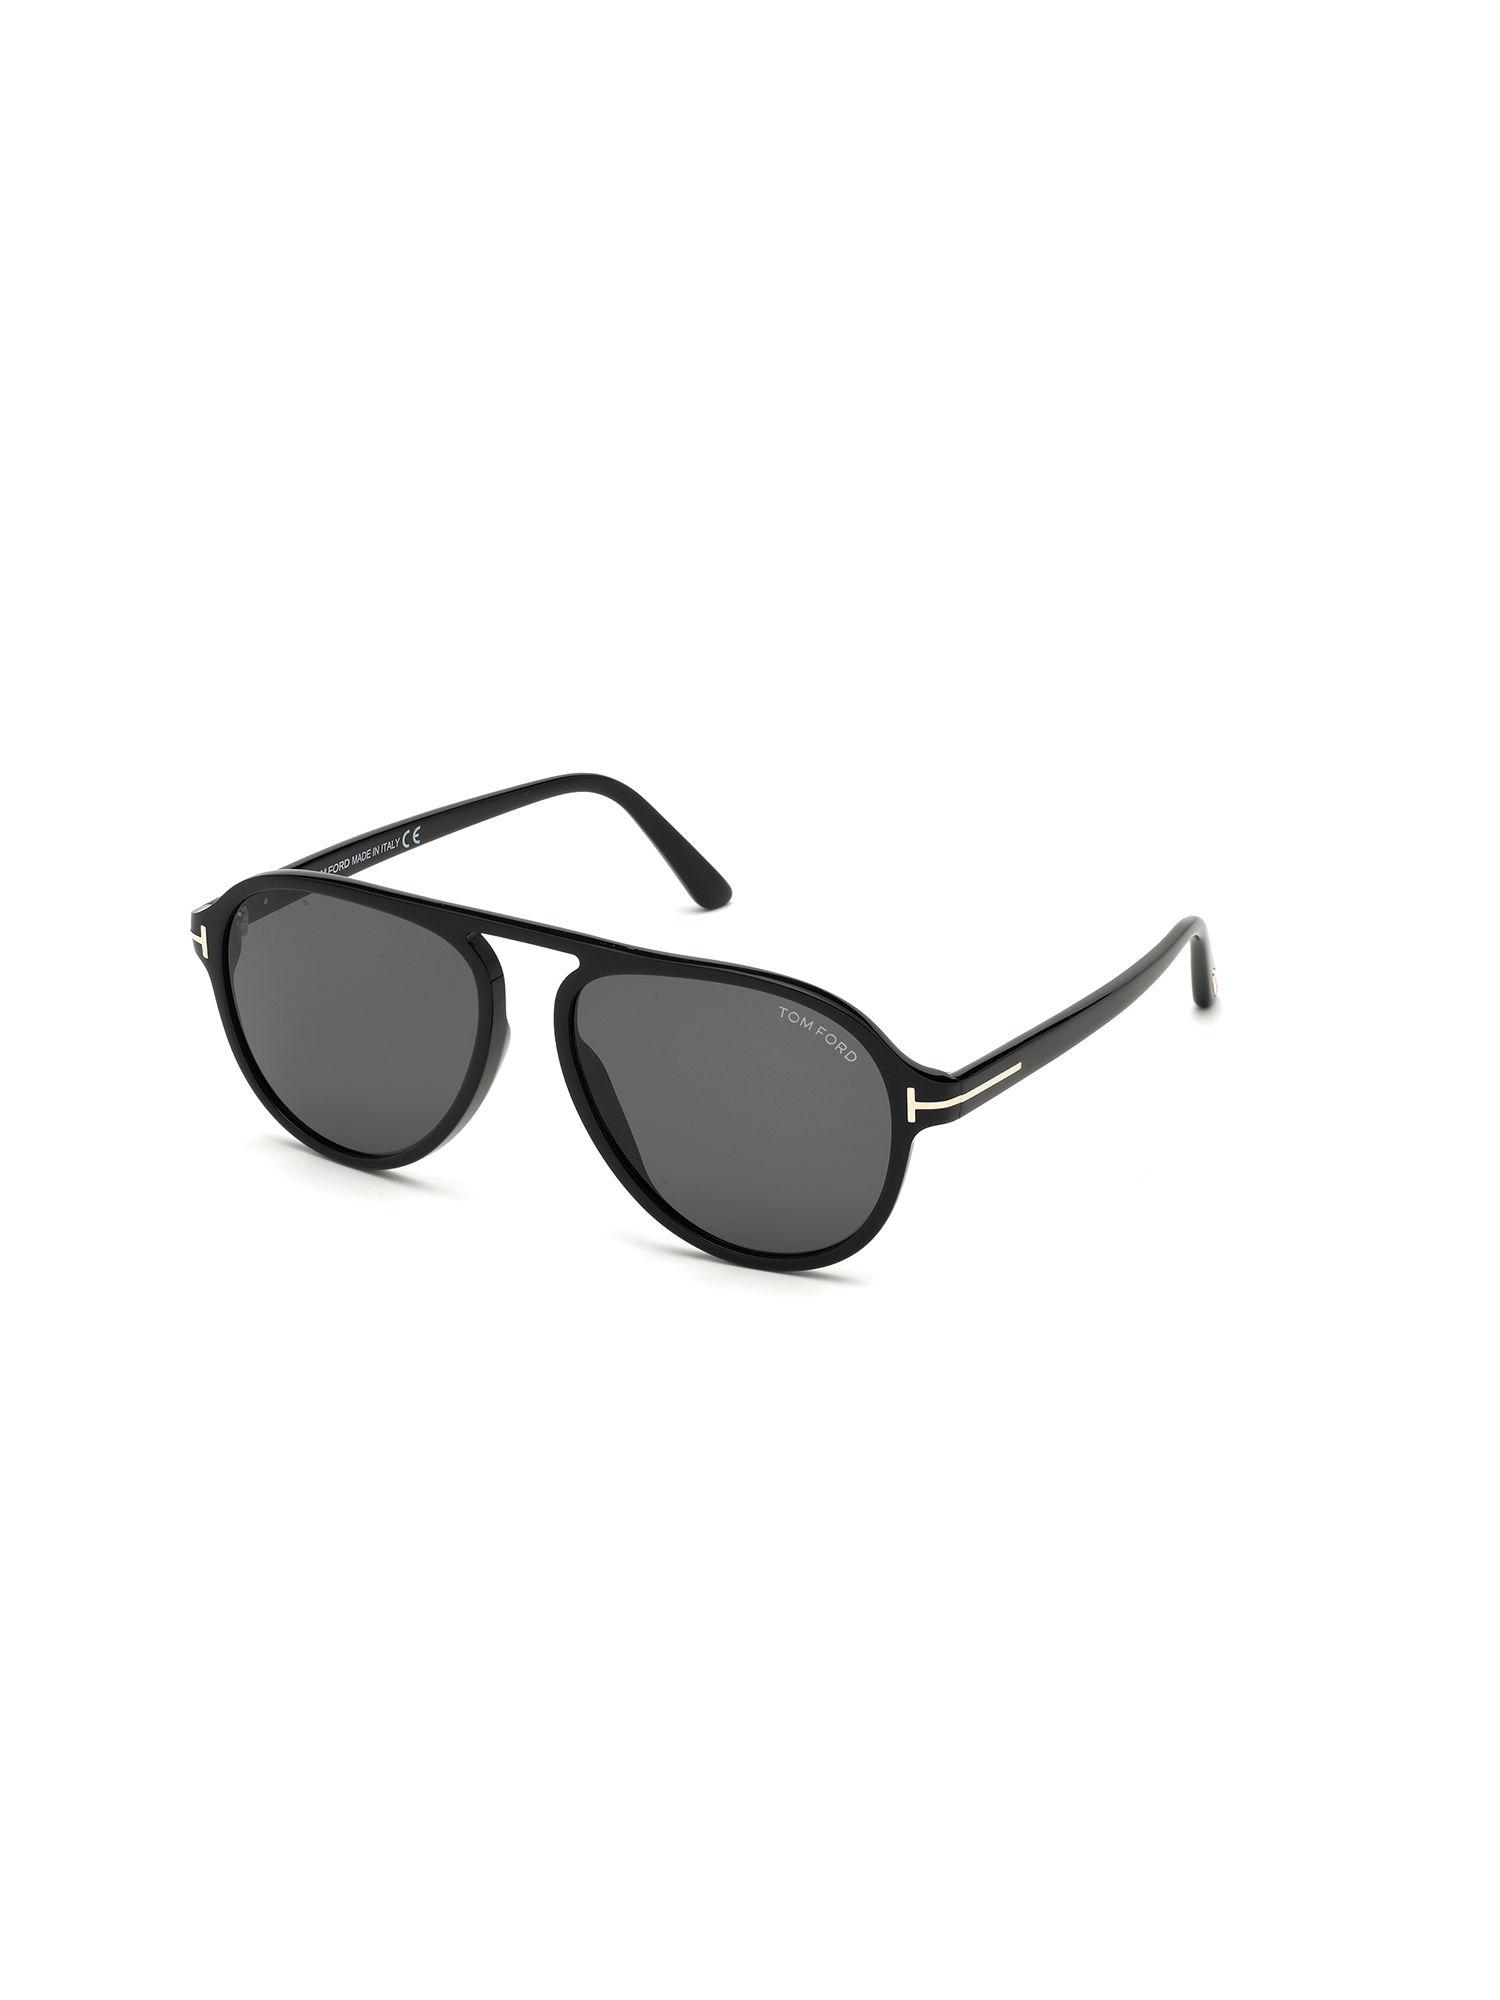 black plastic sunglasses ft0756 57 01a